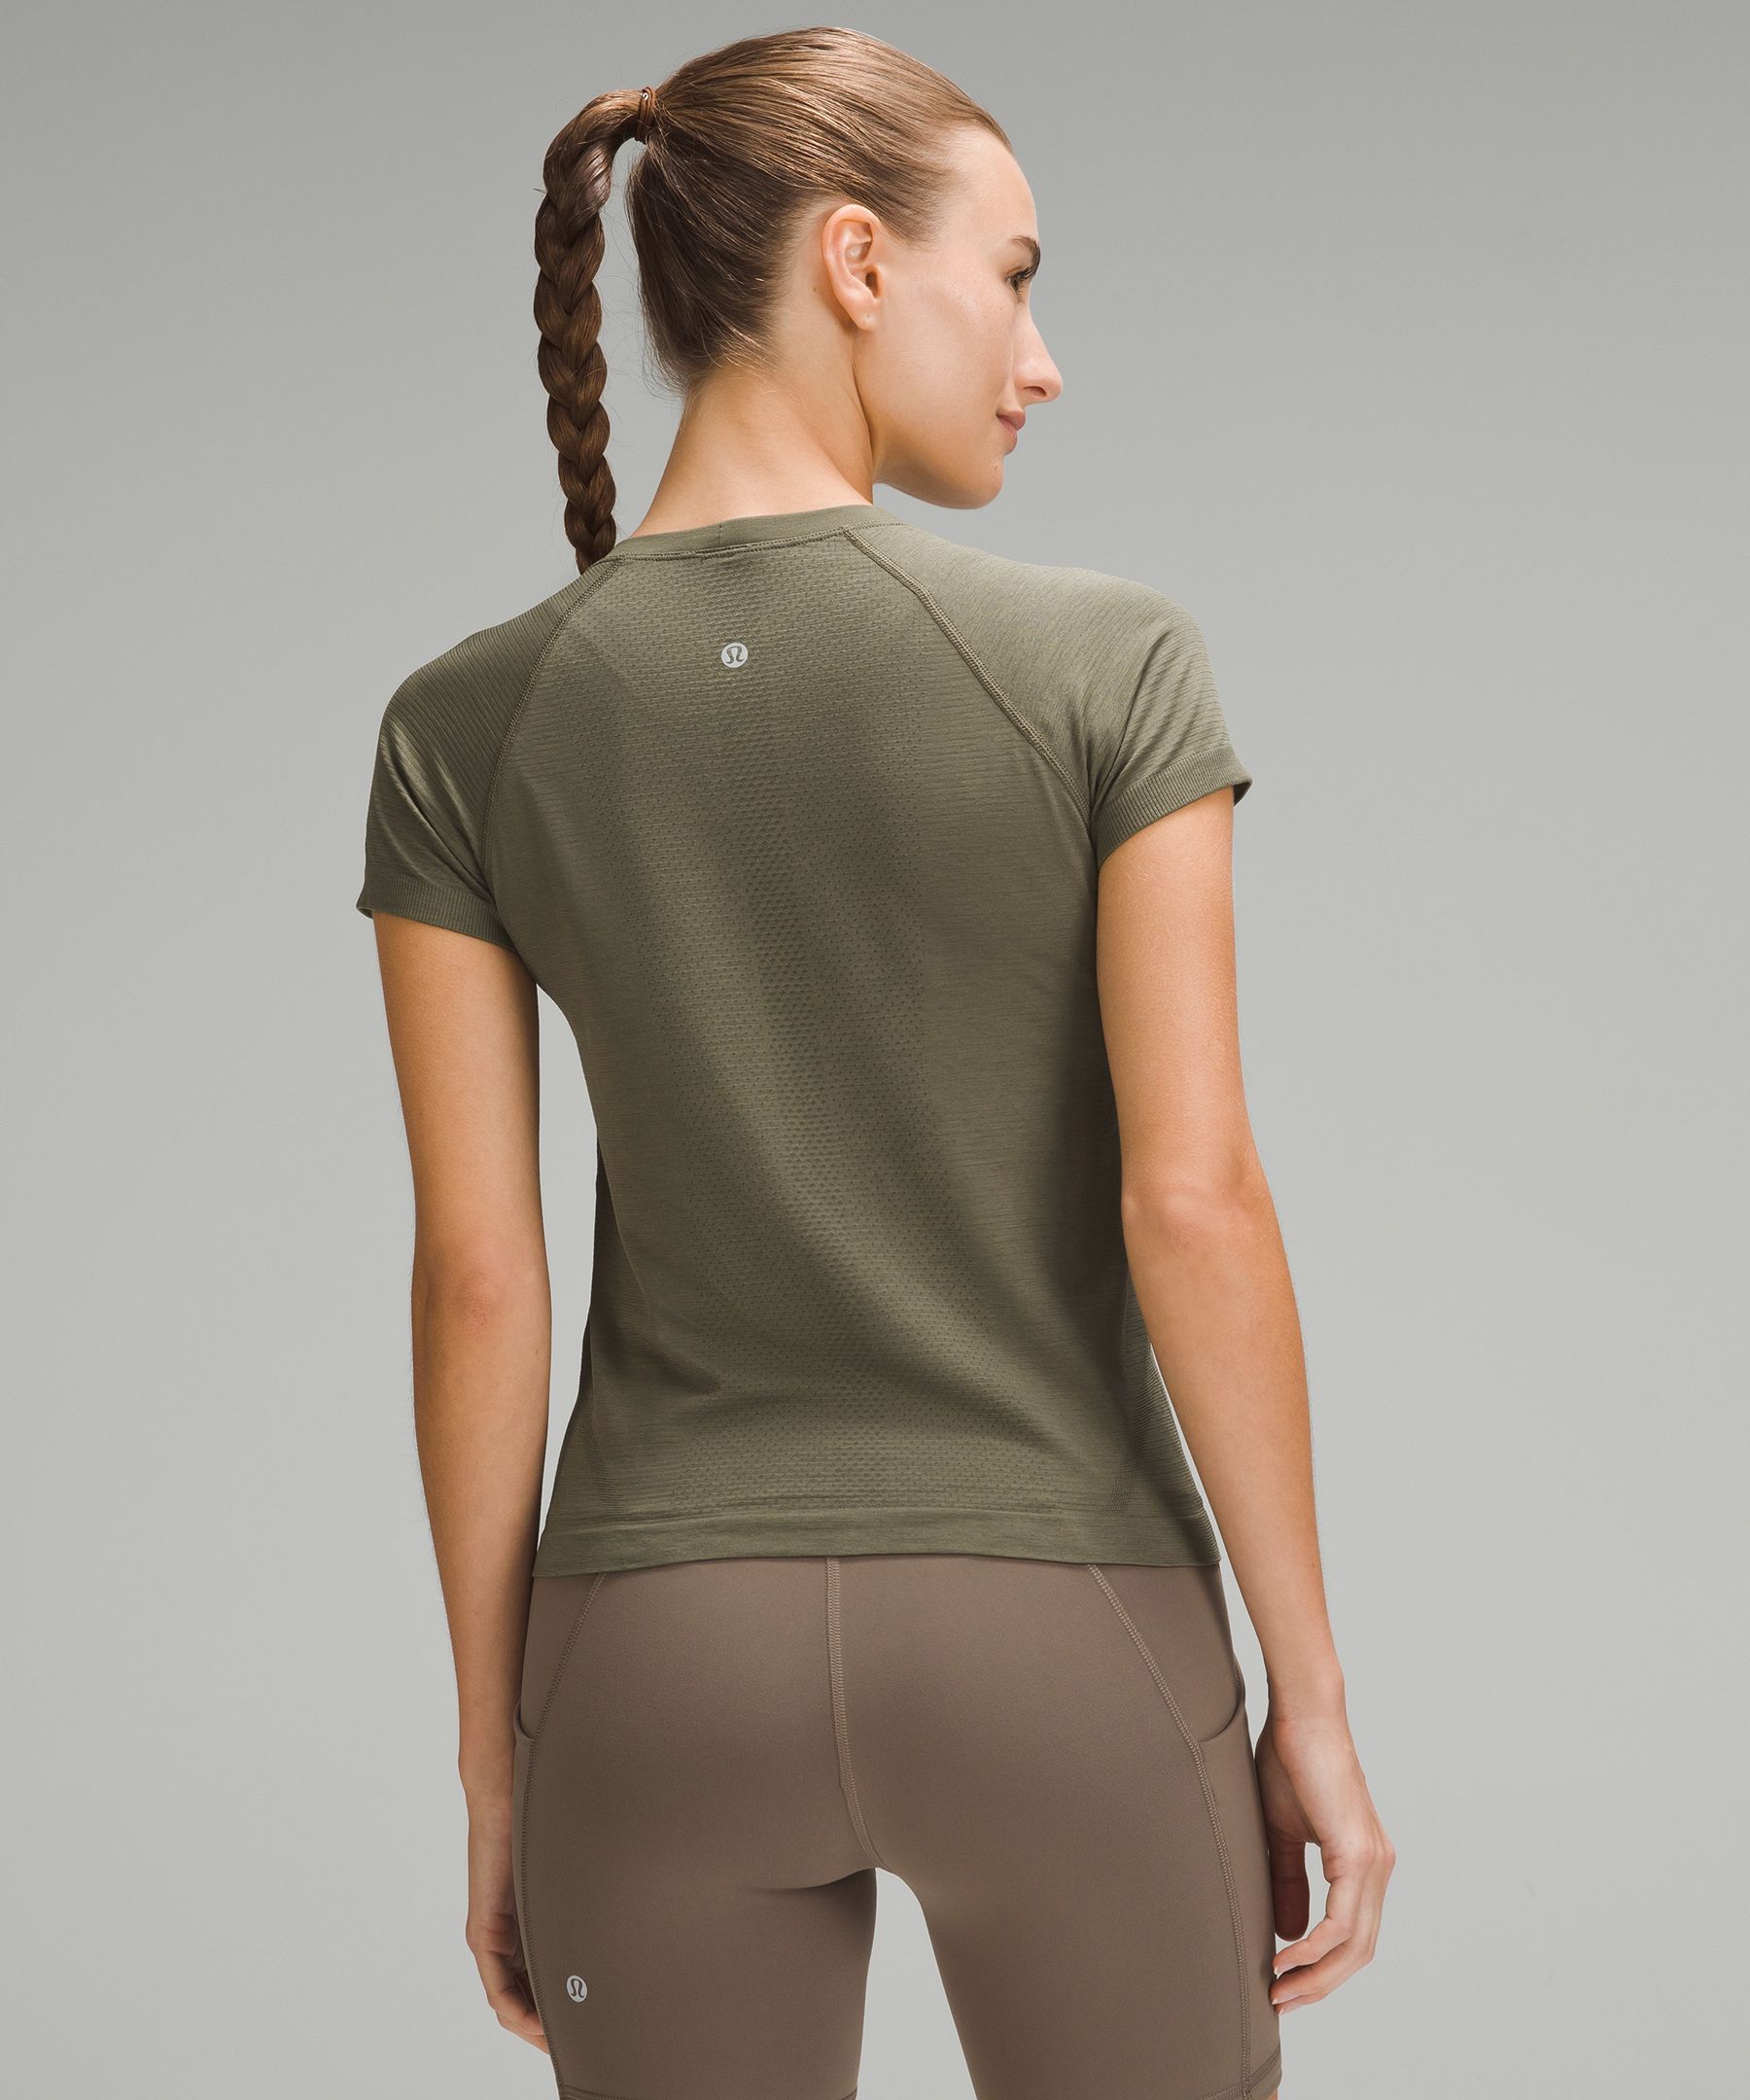 Swiftly Tech Short-Sleeve Shirt 2.0 *Race Length, Women's Short Sleeve  Shirts & Tee's, lululemon